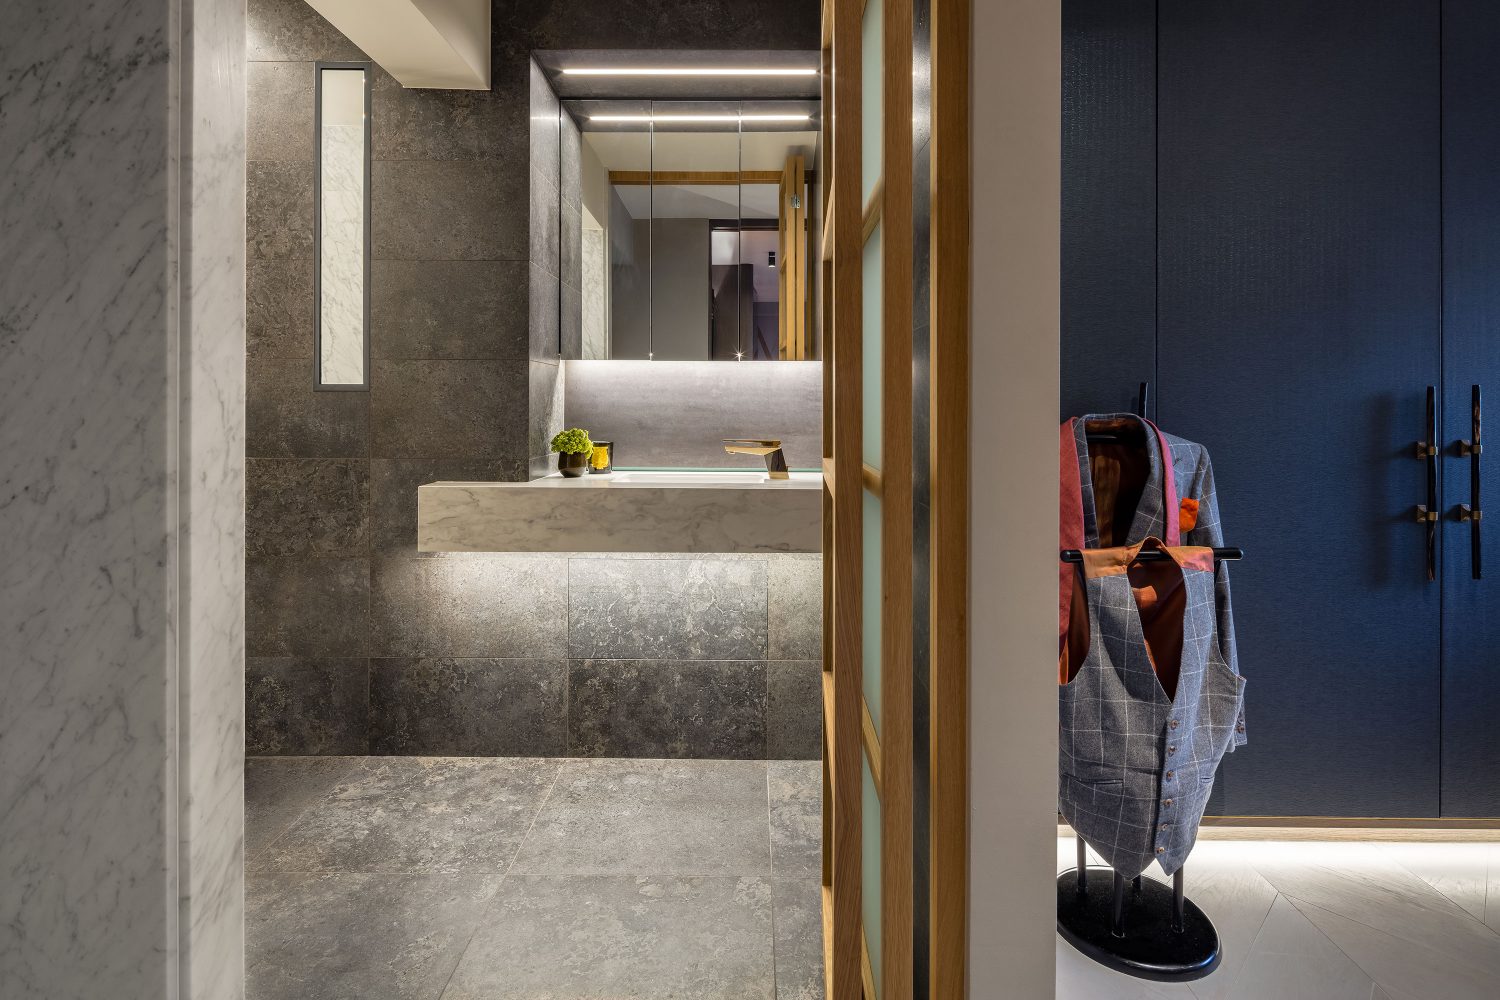 Marylebone bathroom - Daniel Hopwood home design - interior design London